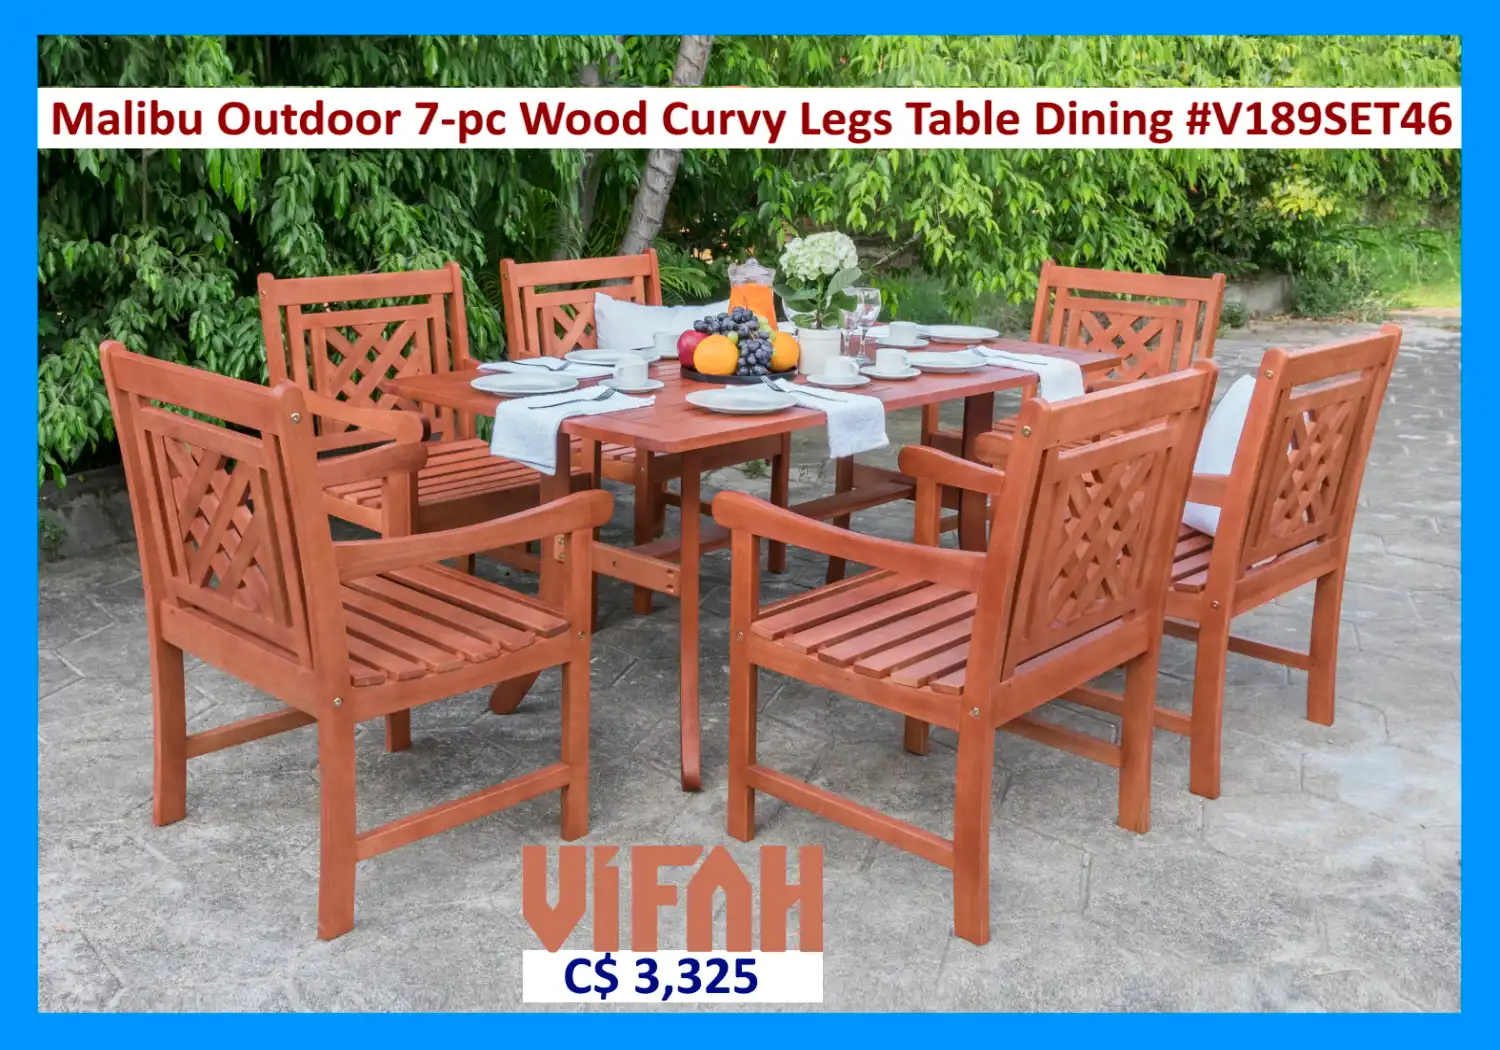 MALIBU Outdoor #V189SET46 7-piece Wood Patio Curvy Legs Table Dining Set